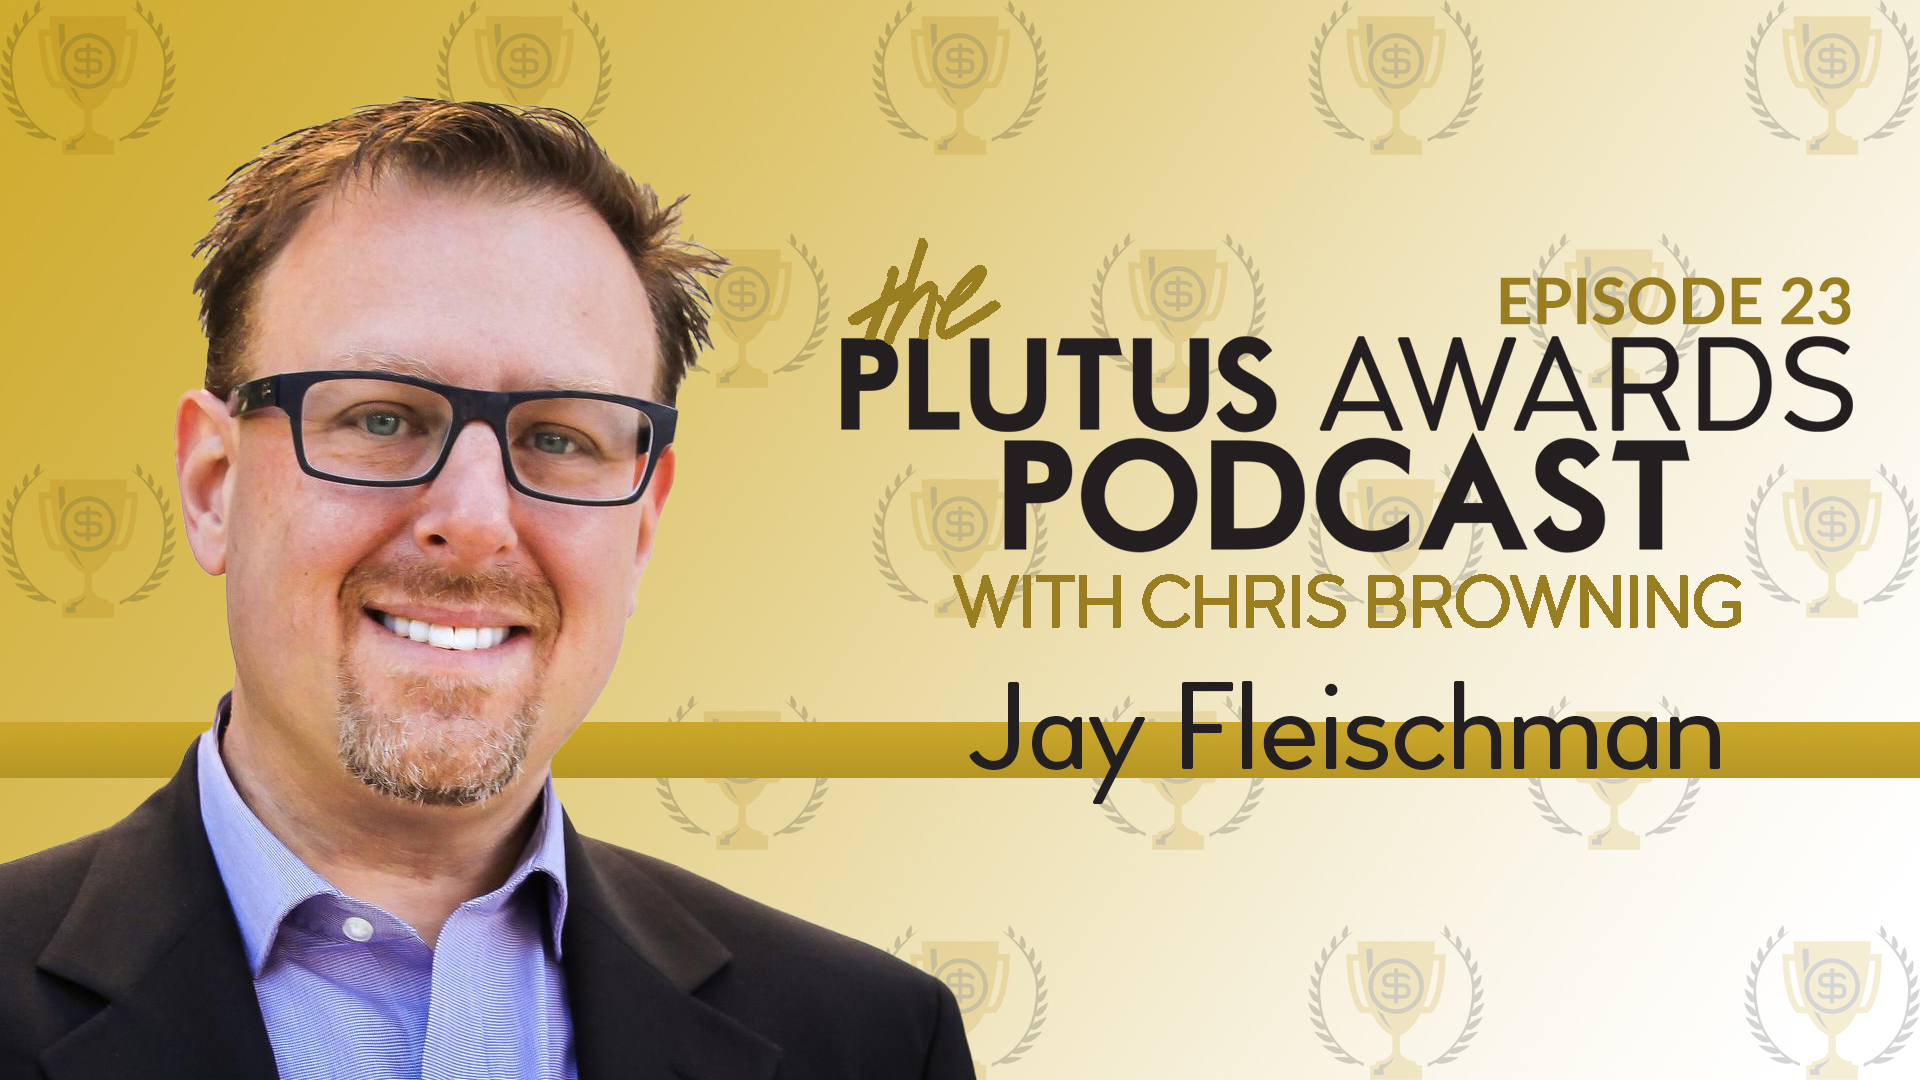 Jay Fleischman Plutus Awards Podcast Featured Image